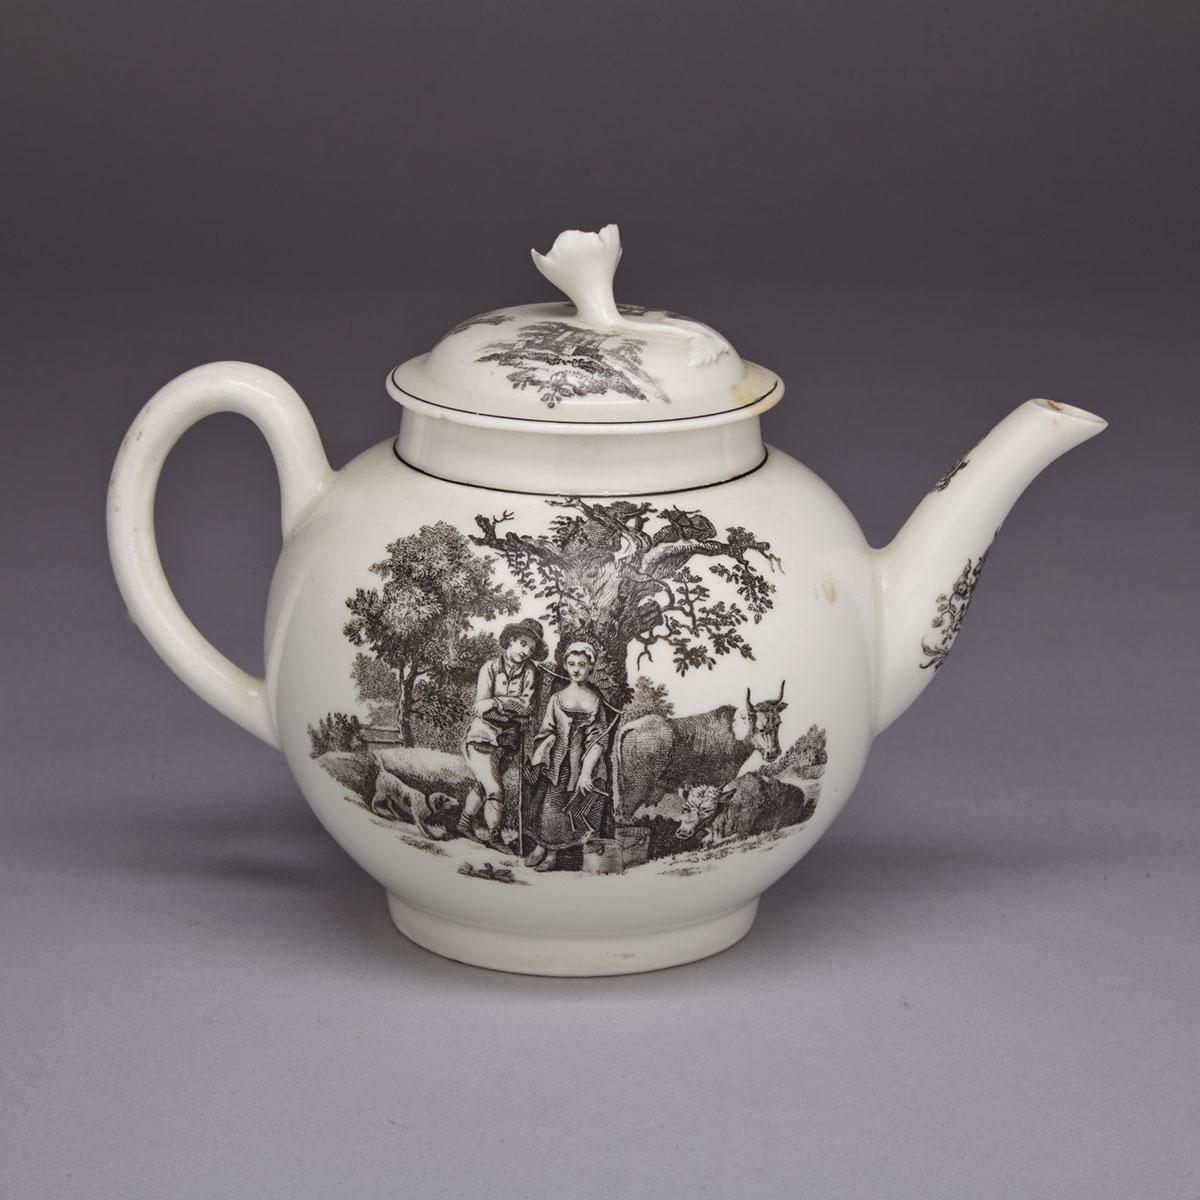 Worcester Black Printed Globular Teapot, c.1765-70